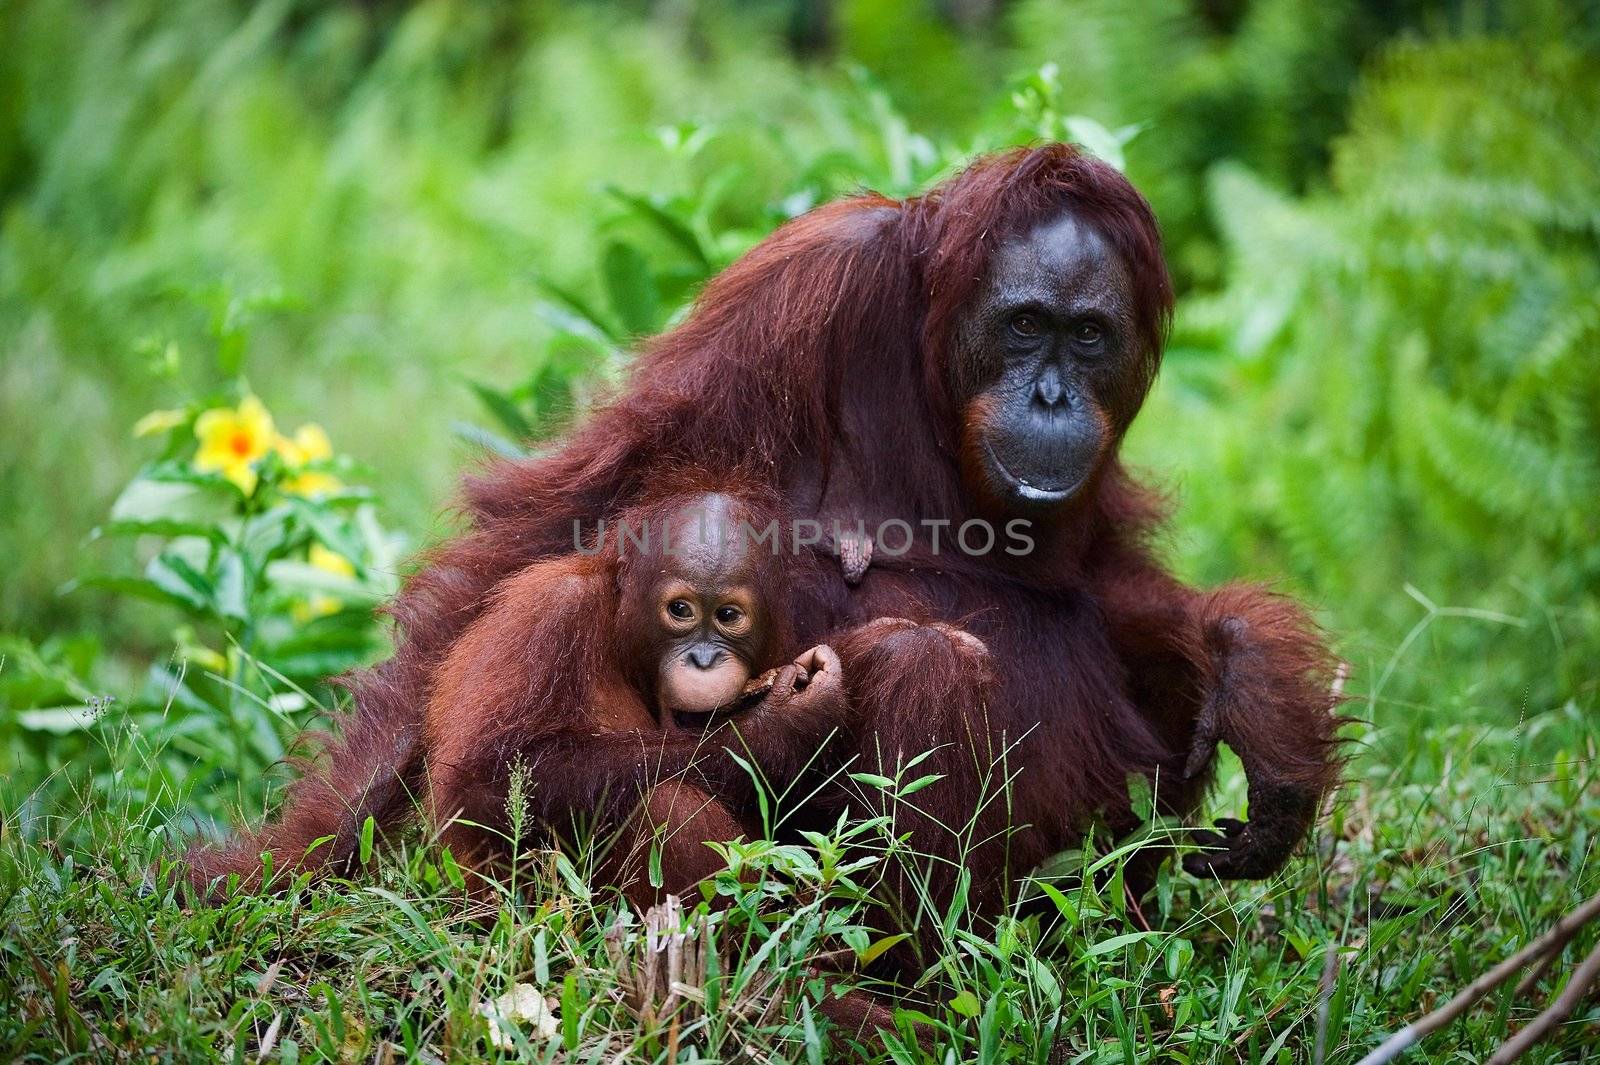 Female the orangutan with the kid on a grass./ Indonesia.Borneo.